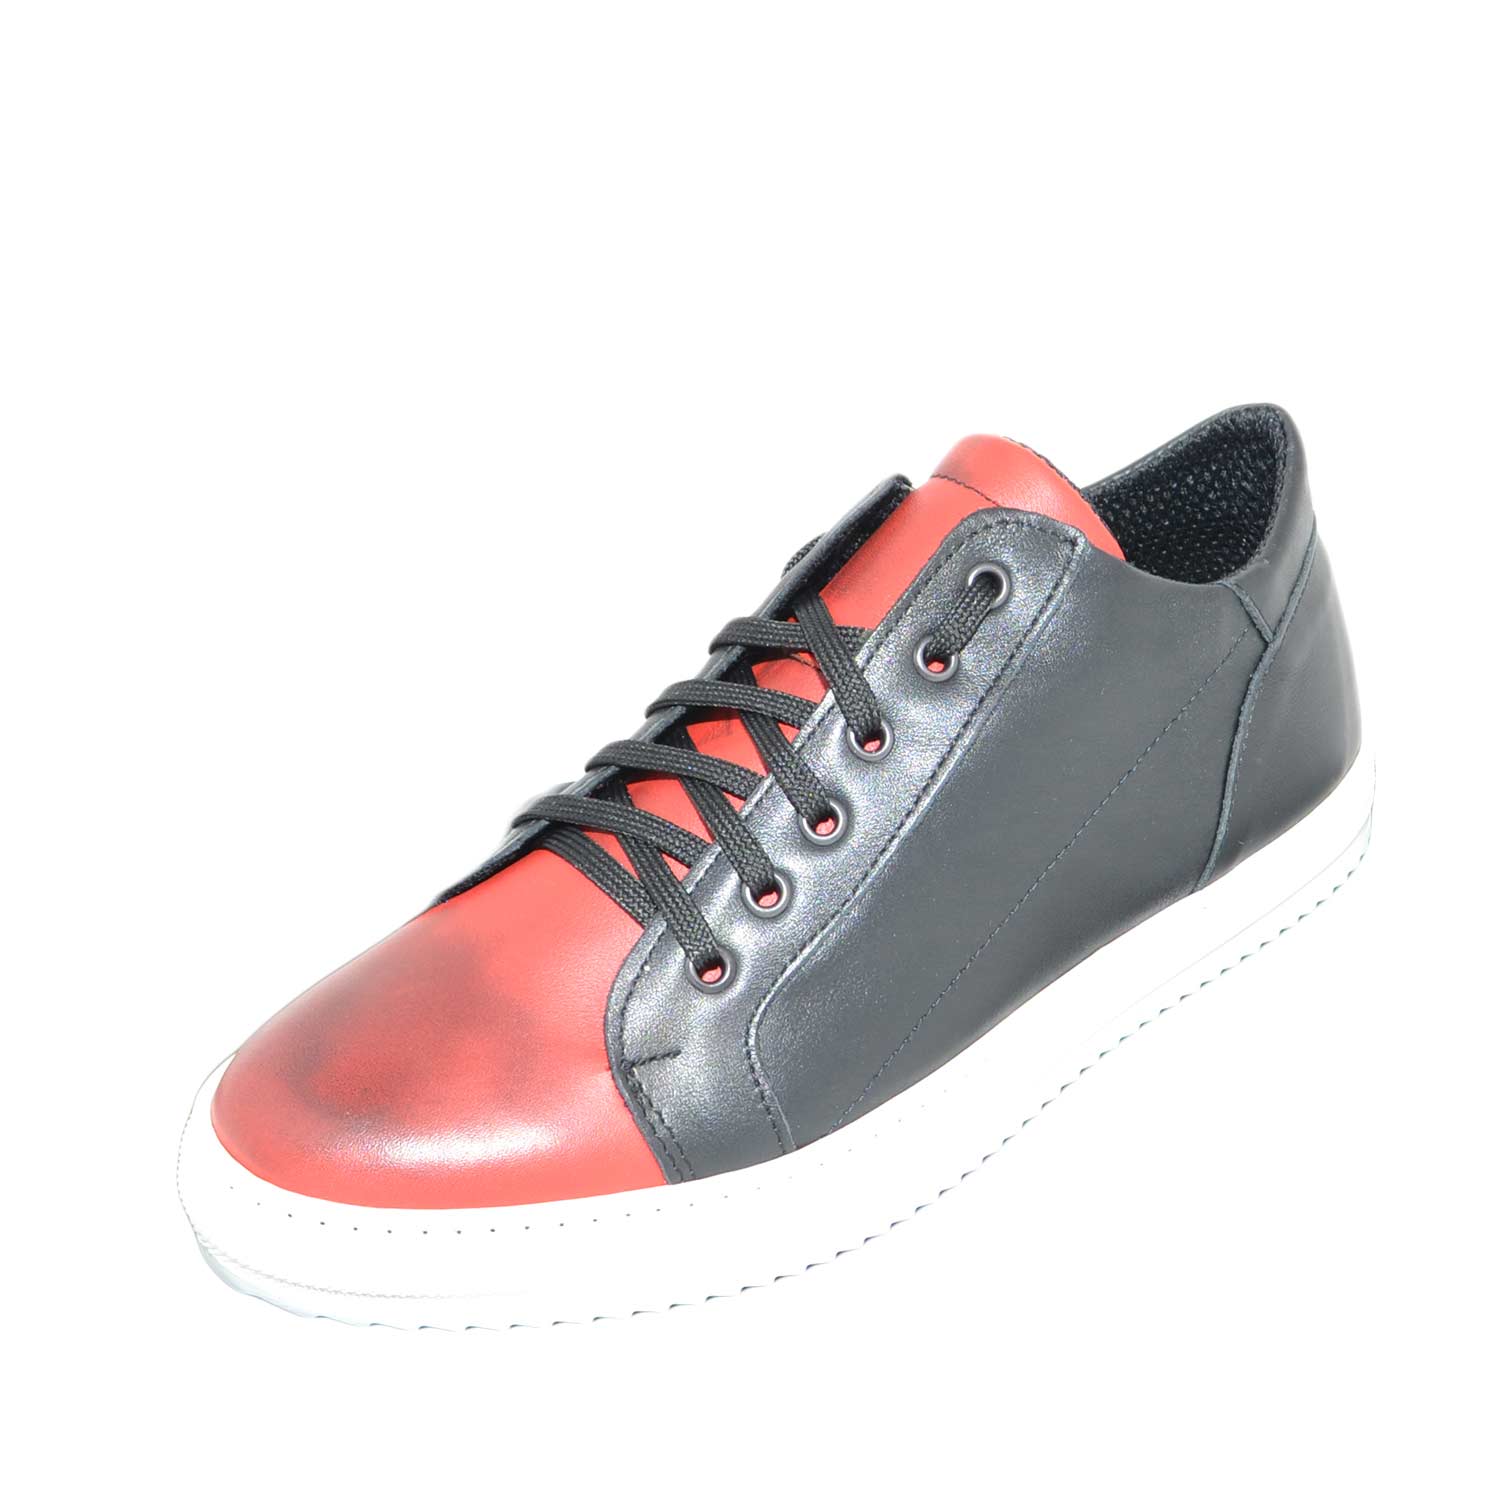 Sneakers bassa uomo art:2384 vera pelle bicolore comode moda made in italy